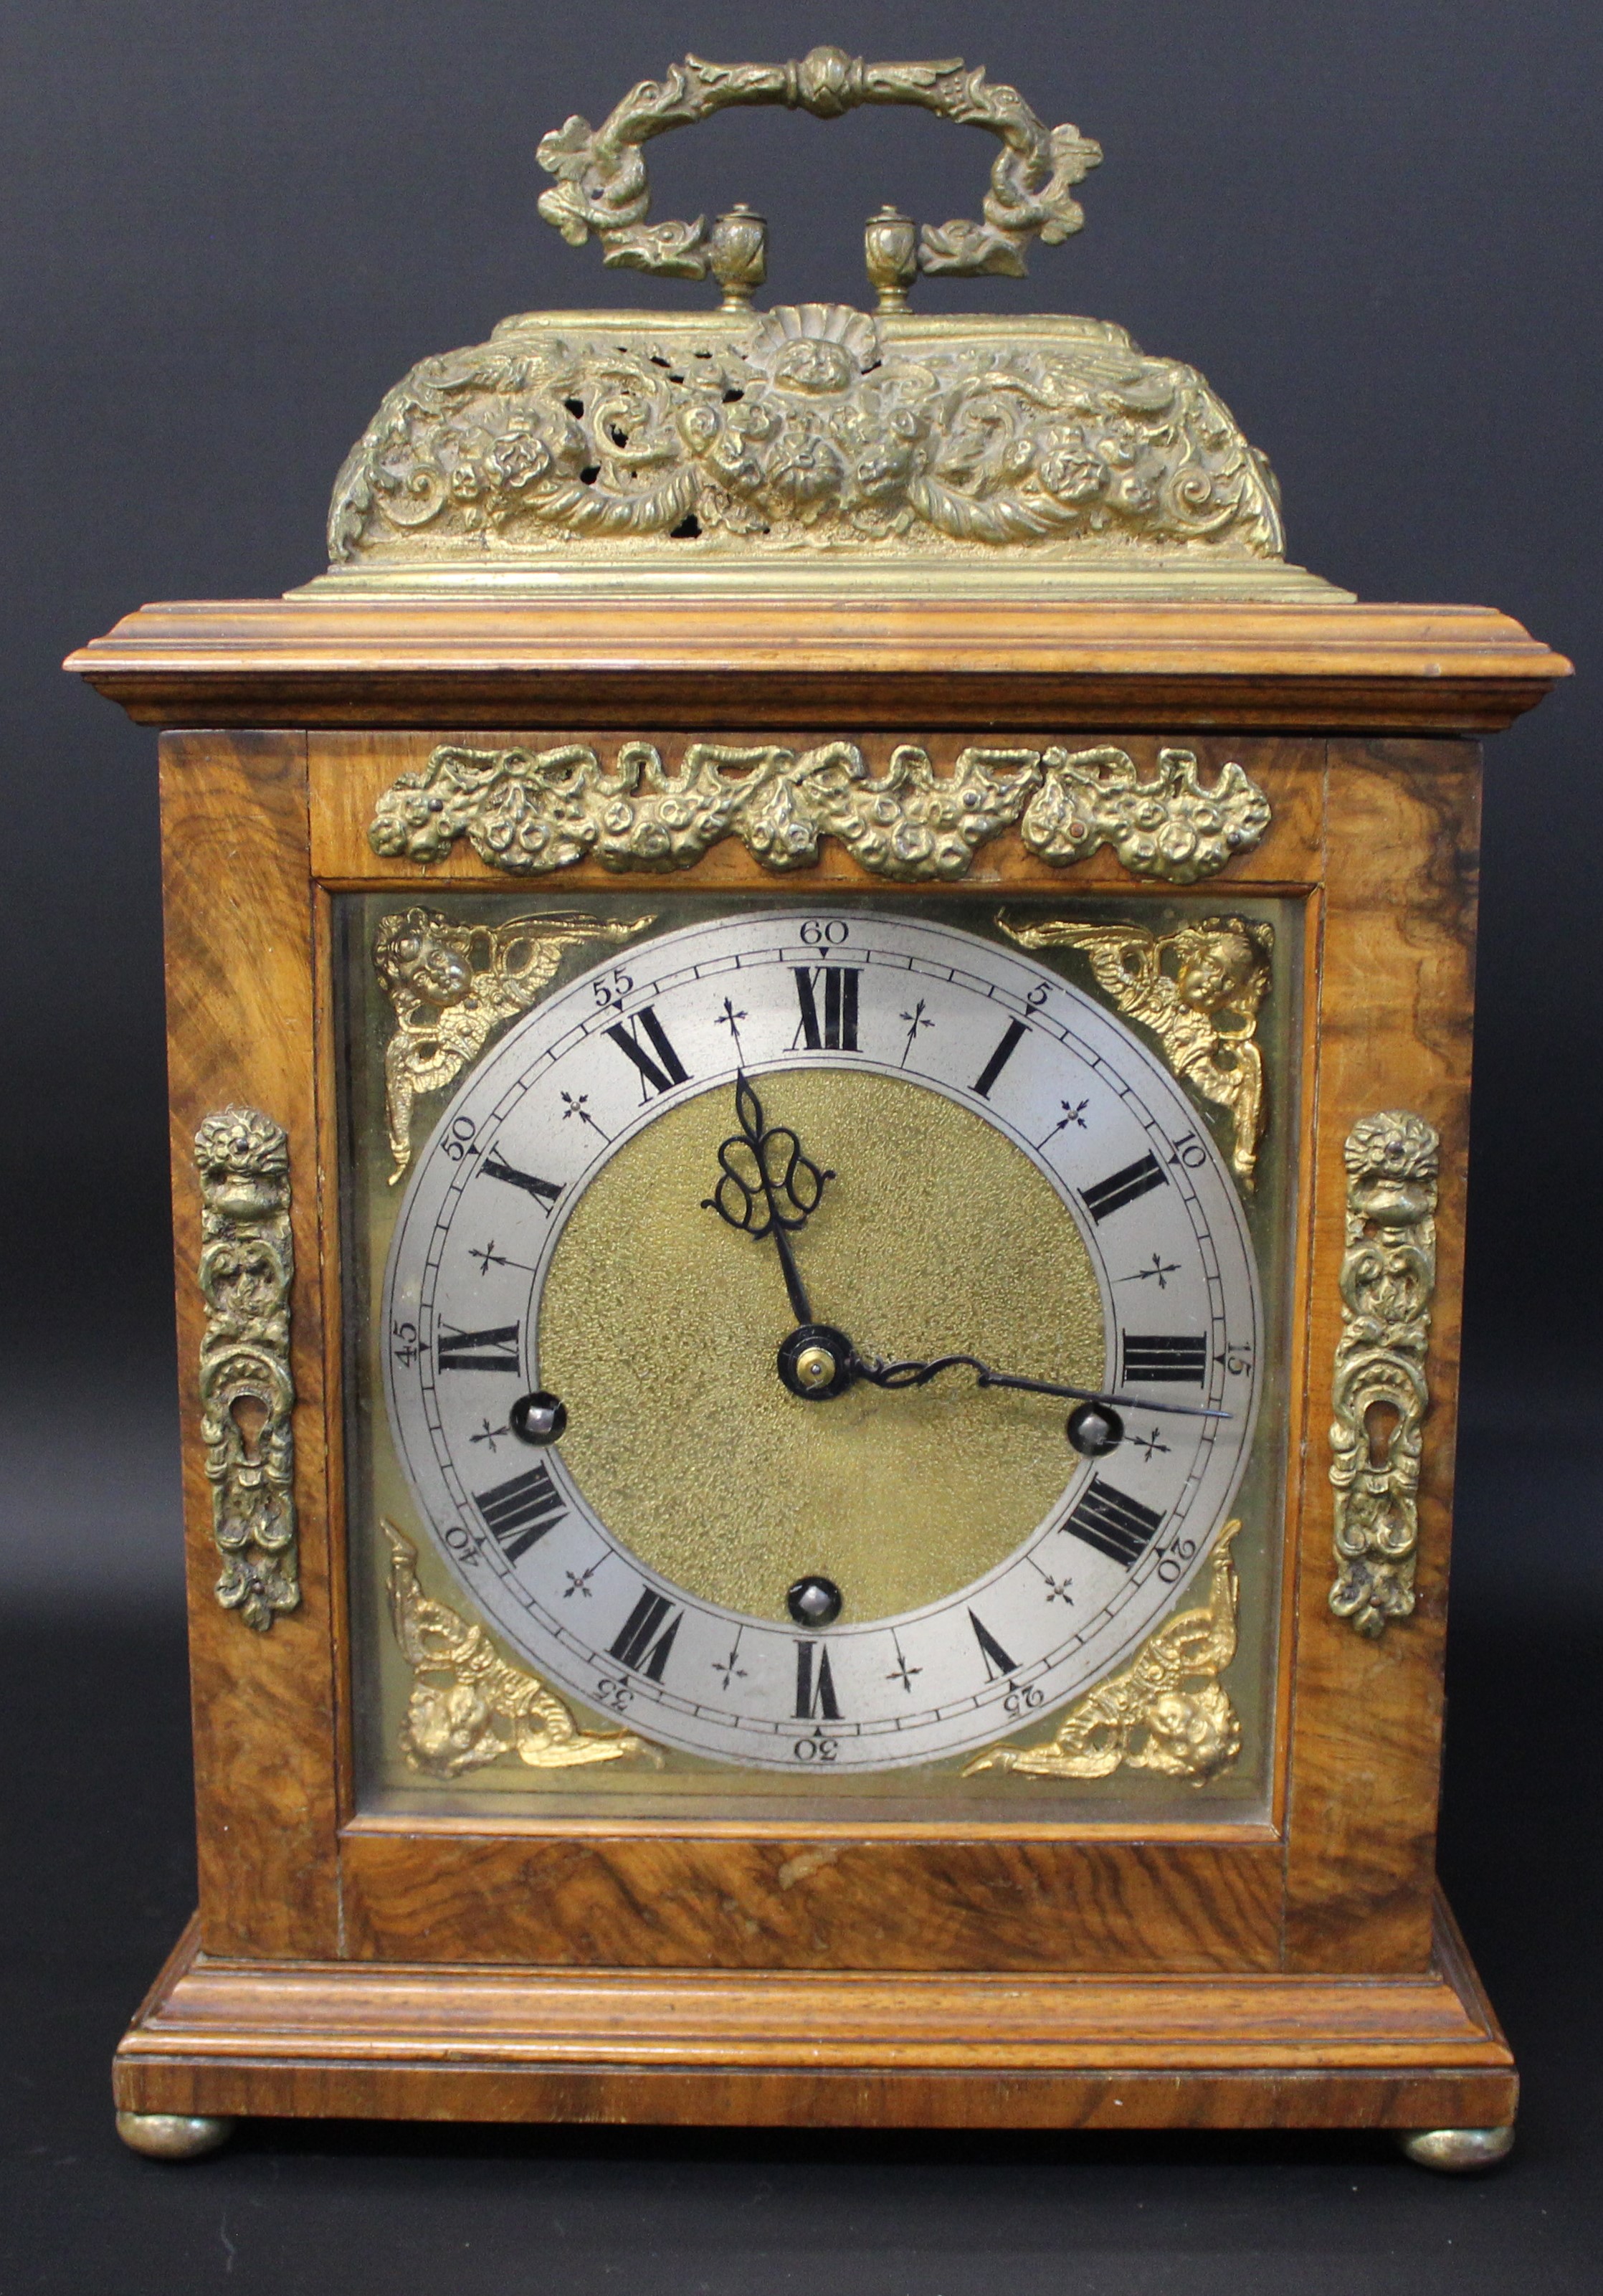 20th century Goldsmiths & Silversmiths Co Ltd ,112 Regent Street, London W1 reproduction table clock - Image 4 of 9